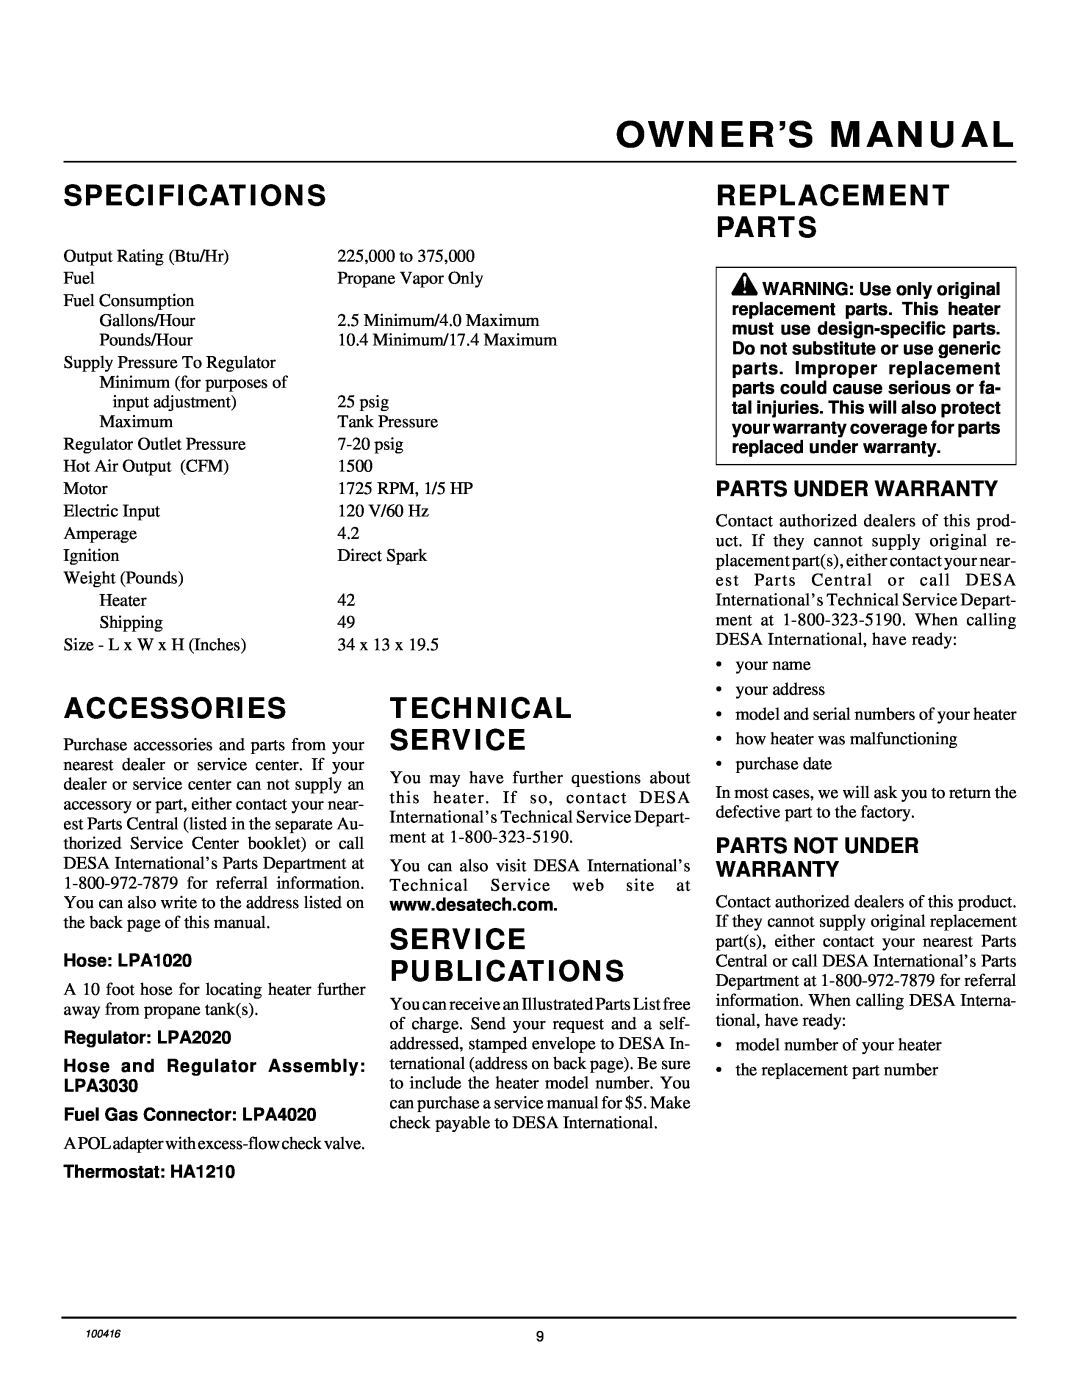 Desa RLP375A Specifications, Replacement Parts, Accessories, Technical Service, Service Publications, Hose LPA1020 